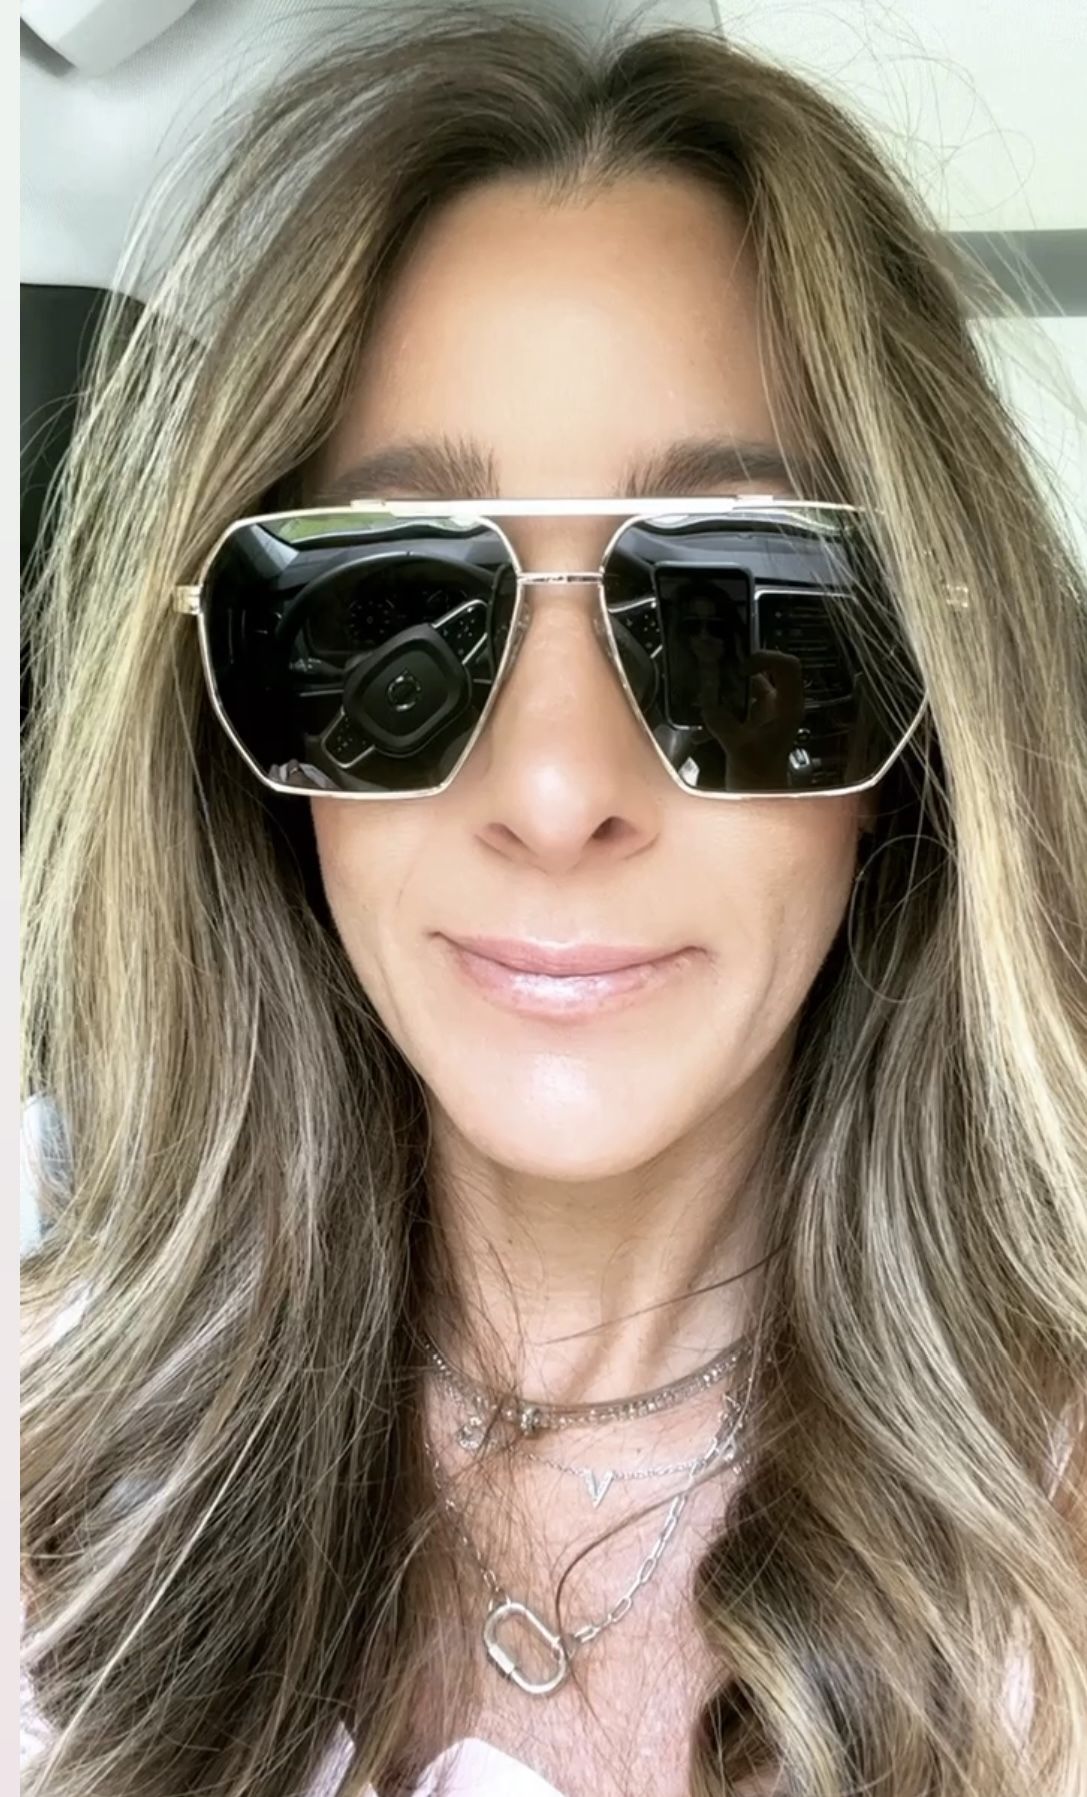 SOJOS Retro Oversized Square Polarized Sunglasses for Women and Men | Amazon (US)